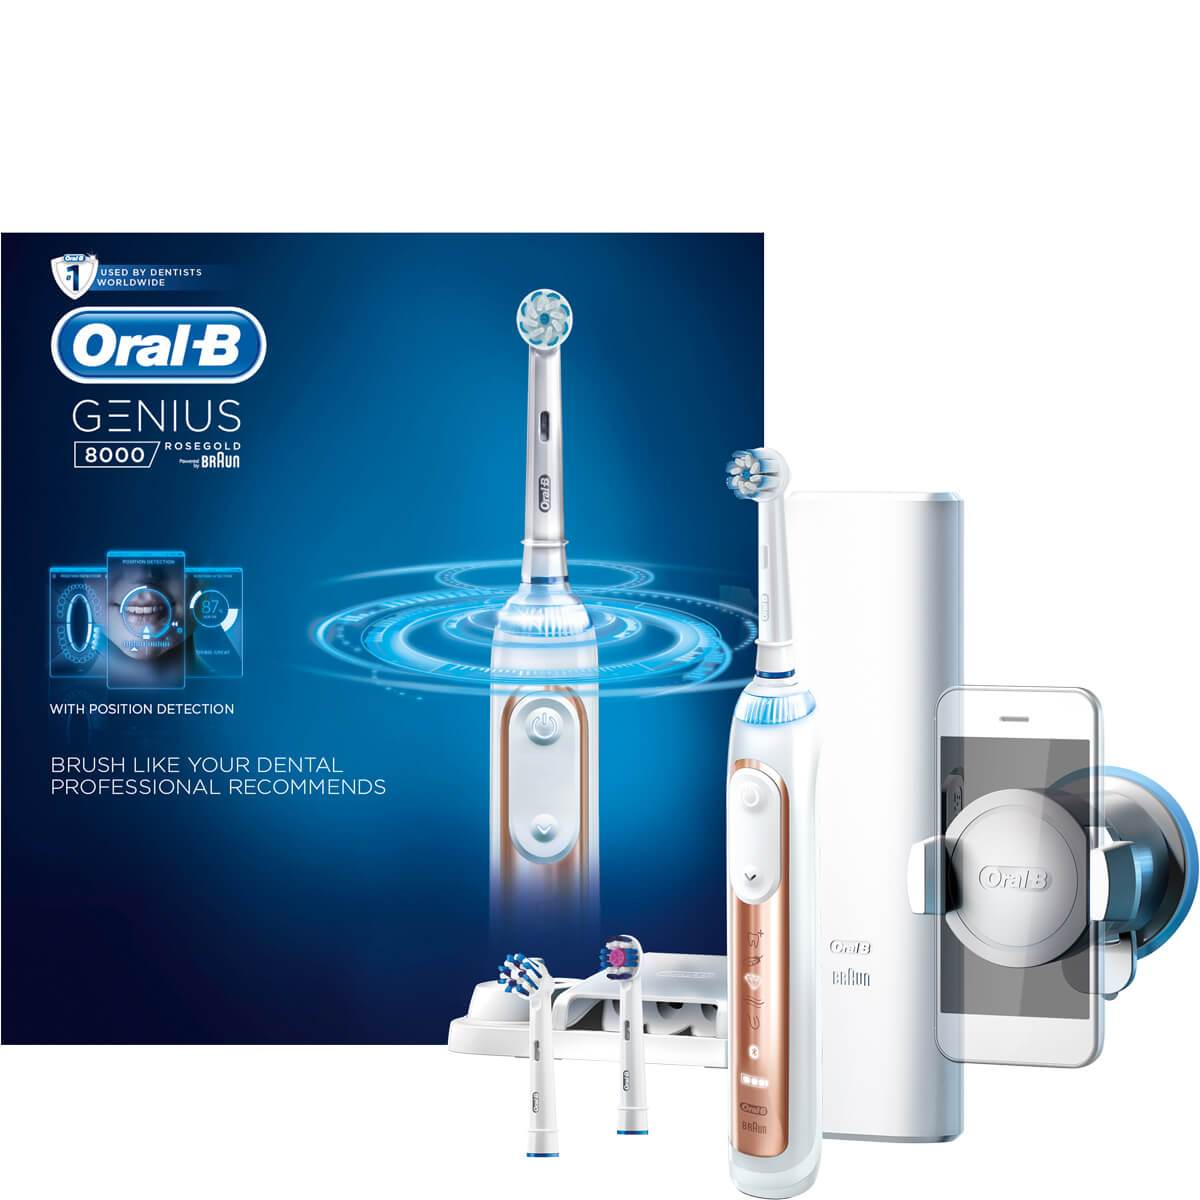 zonnebloem Berucht Vuiligheid Oral-B Genius 8000 Sensitive Rose Gold Electric Toothbrush CurrentBody US